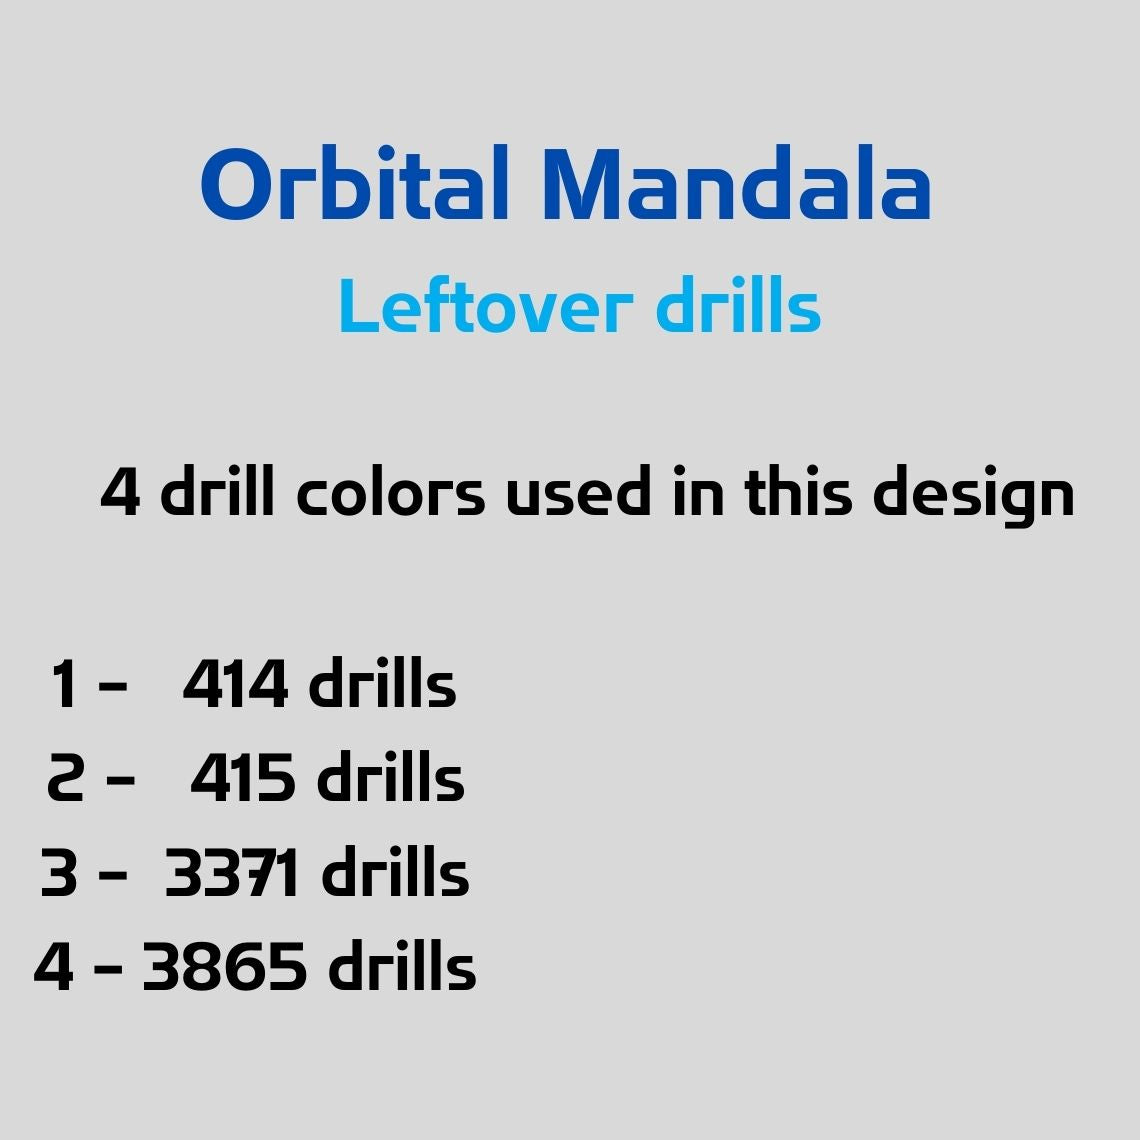 Orbital Mandala - Leftover drills count